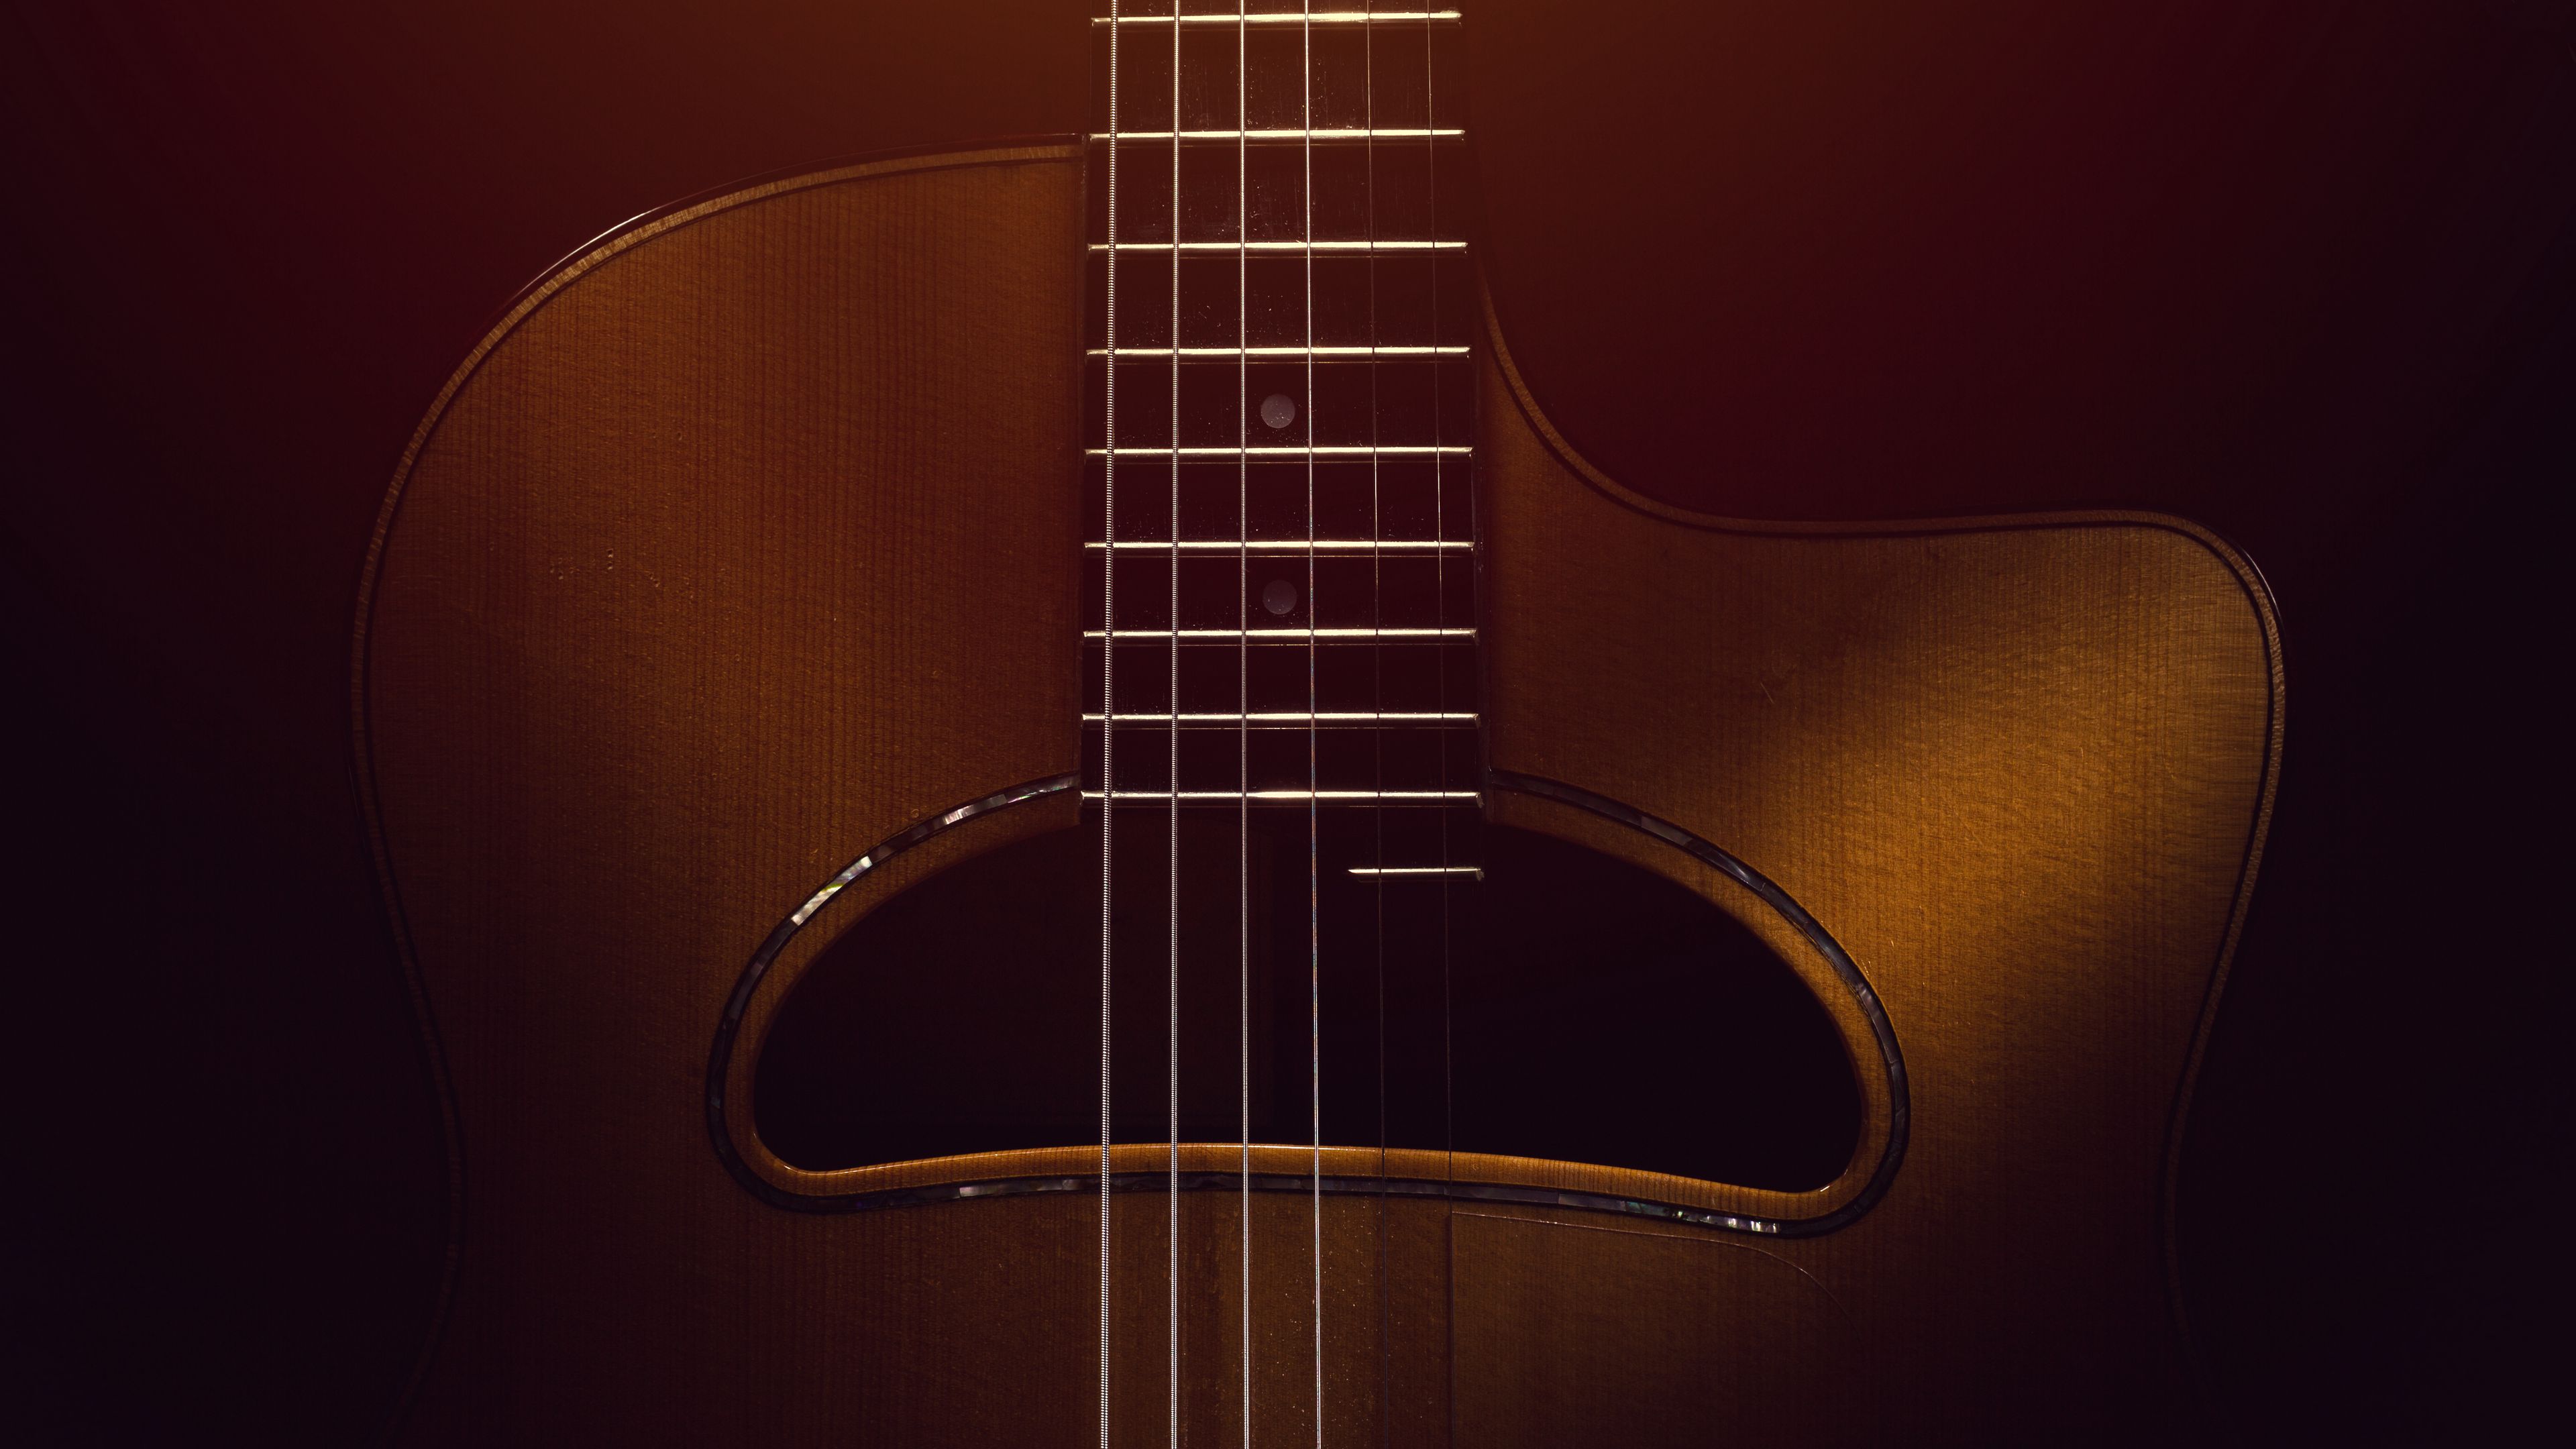 Download wallpaper 3840x2160 guitar, strings, fretboard, music, brown ...